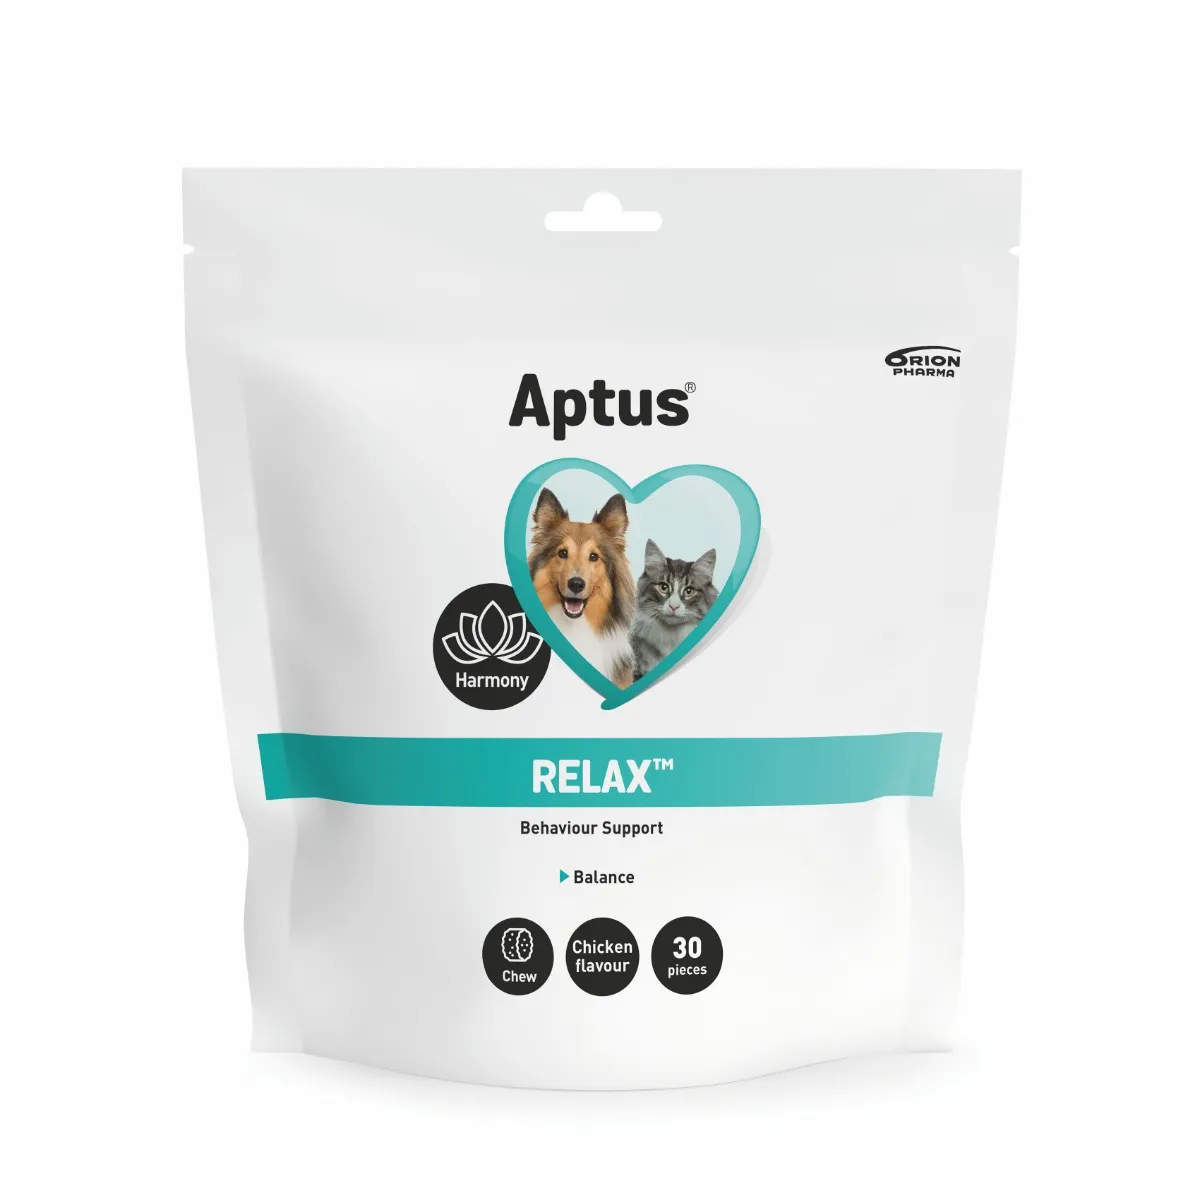 Aptus Relax